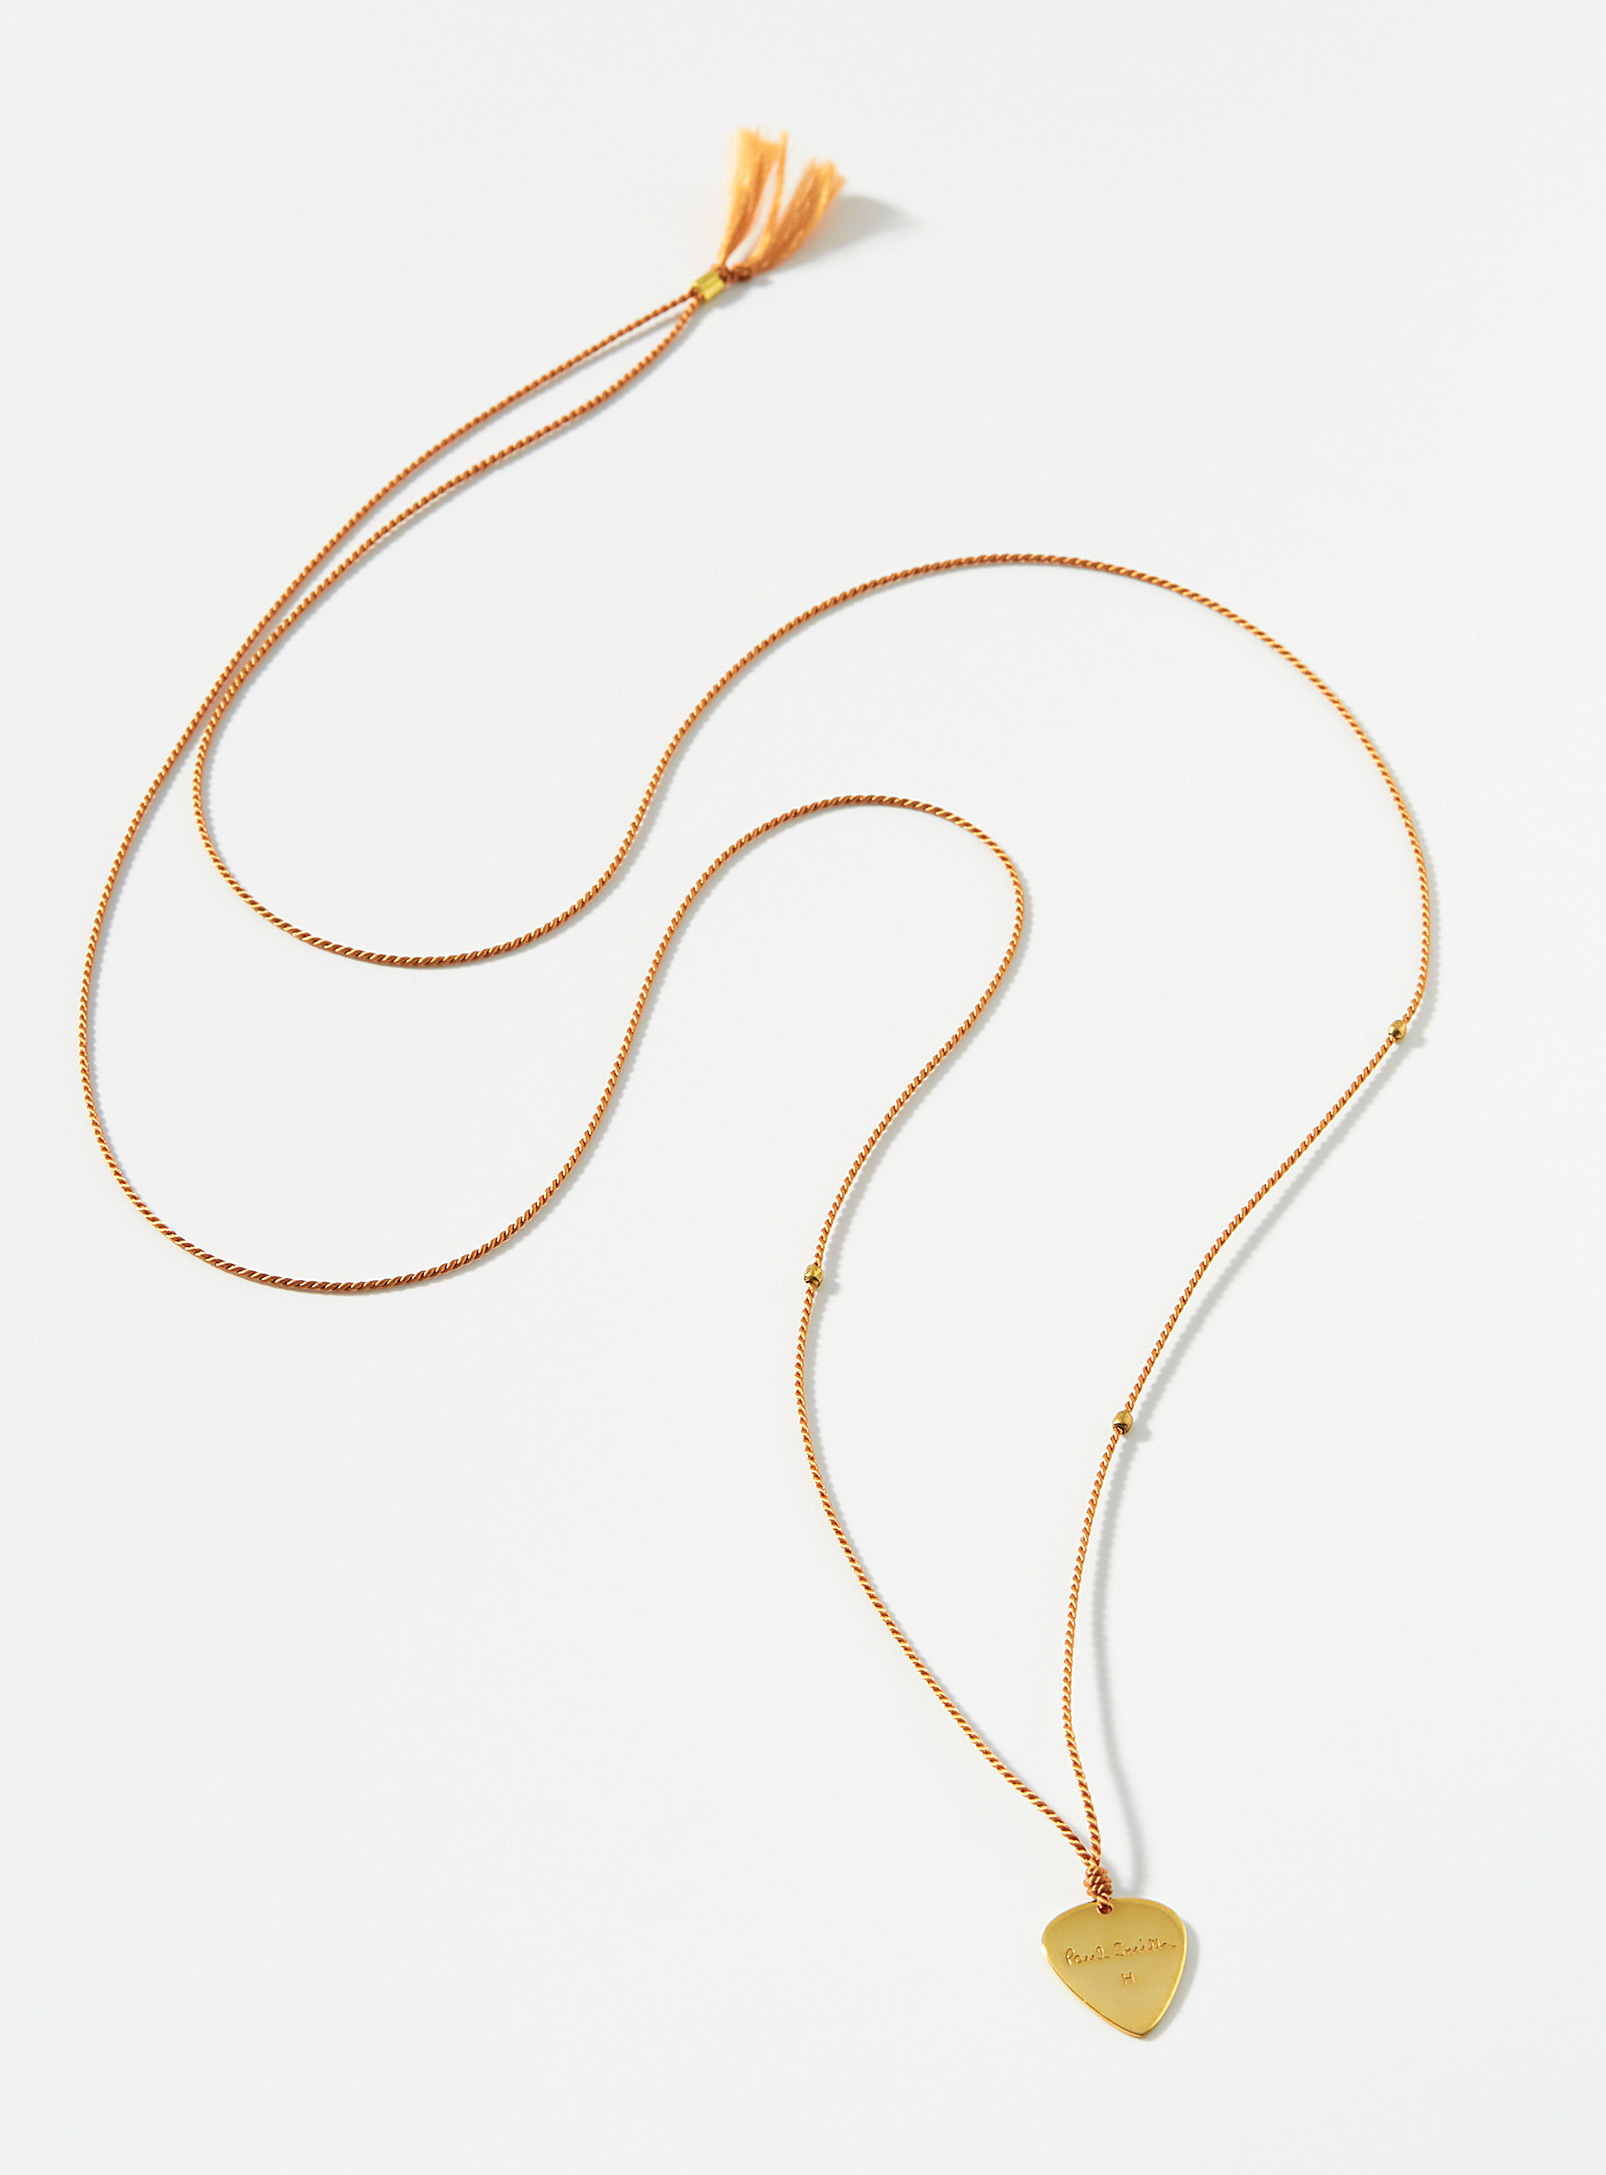 Paul Smith - Le collier corde de soie pendentif médiator